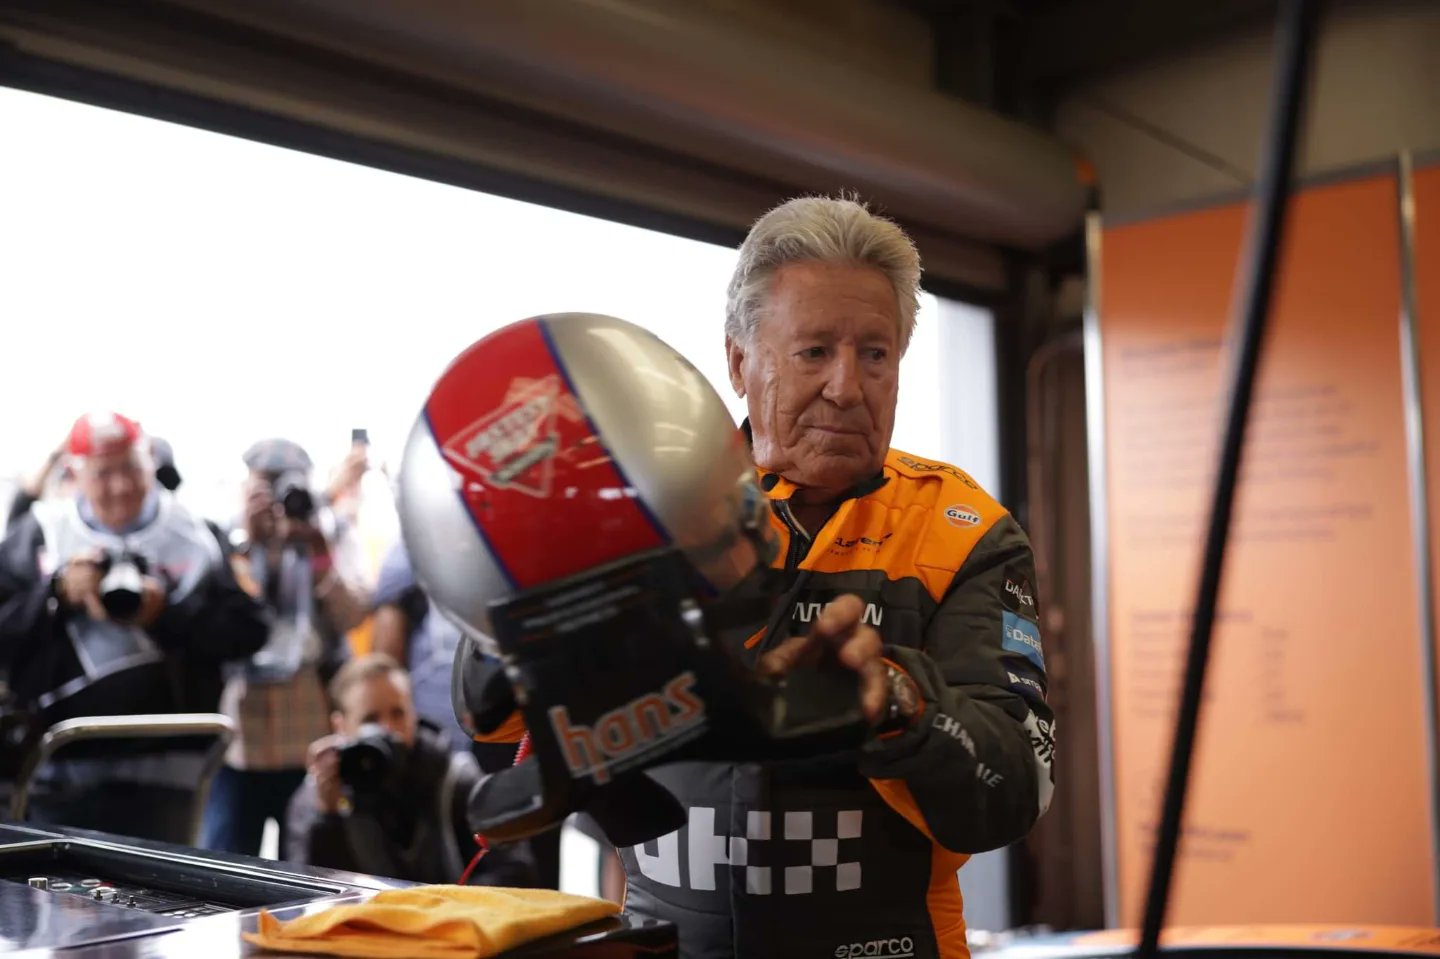 Video: Mario Andretti driving McLaren F1 car at Laguna Seca ...